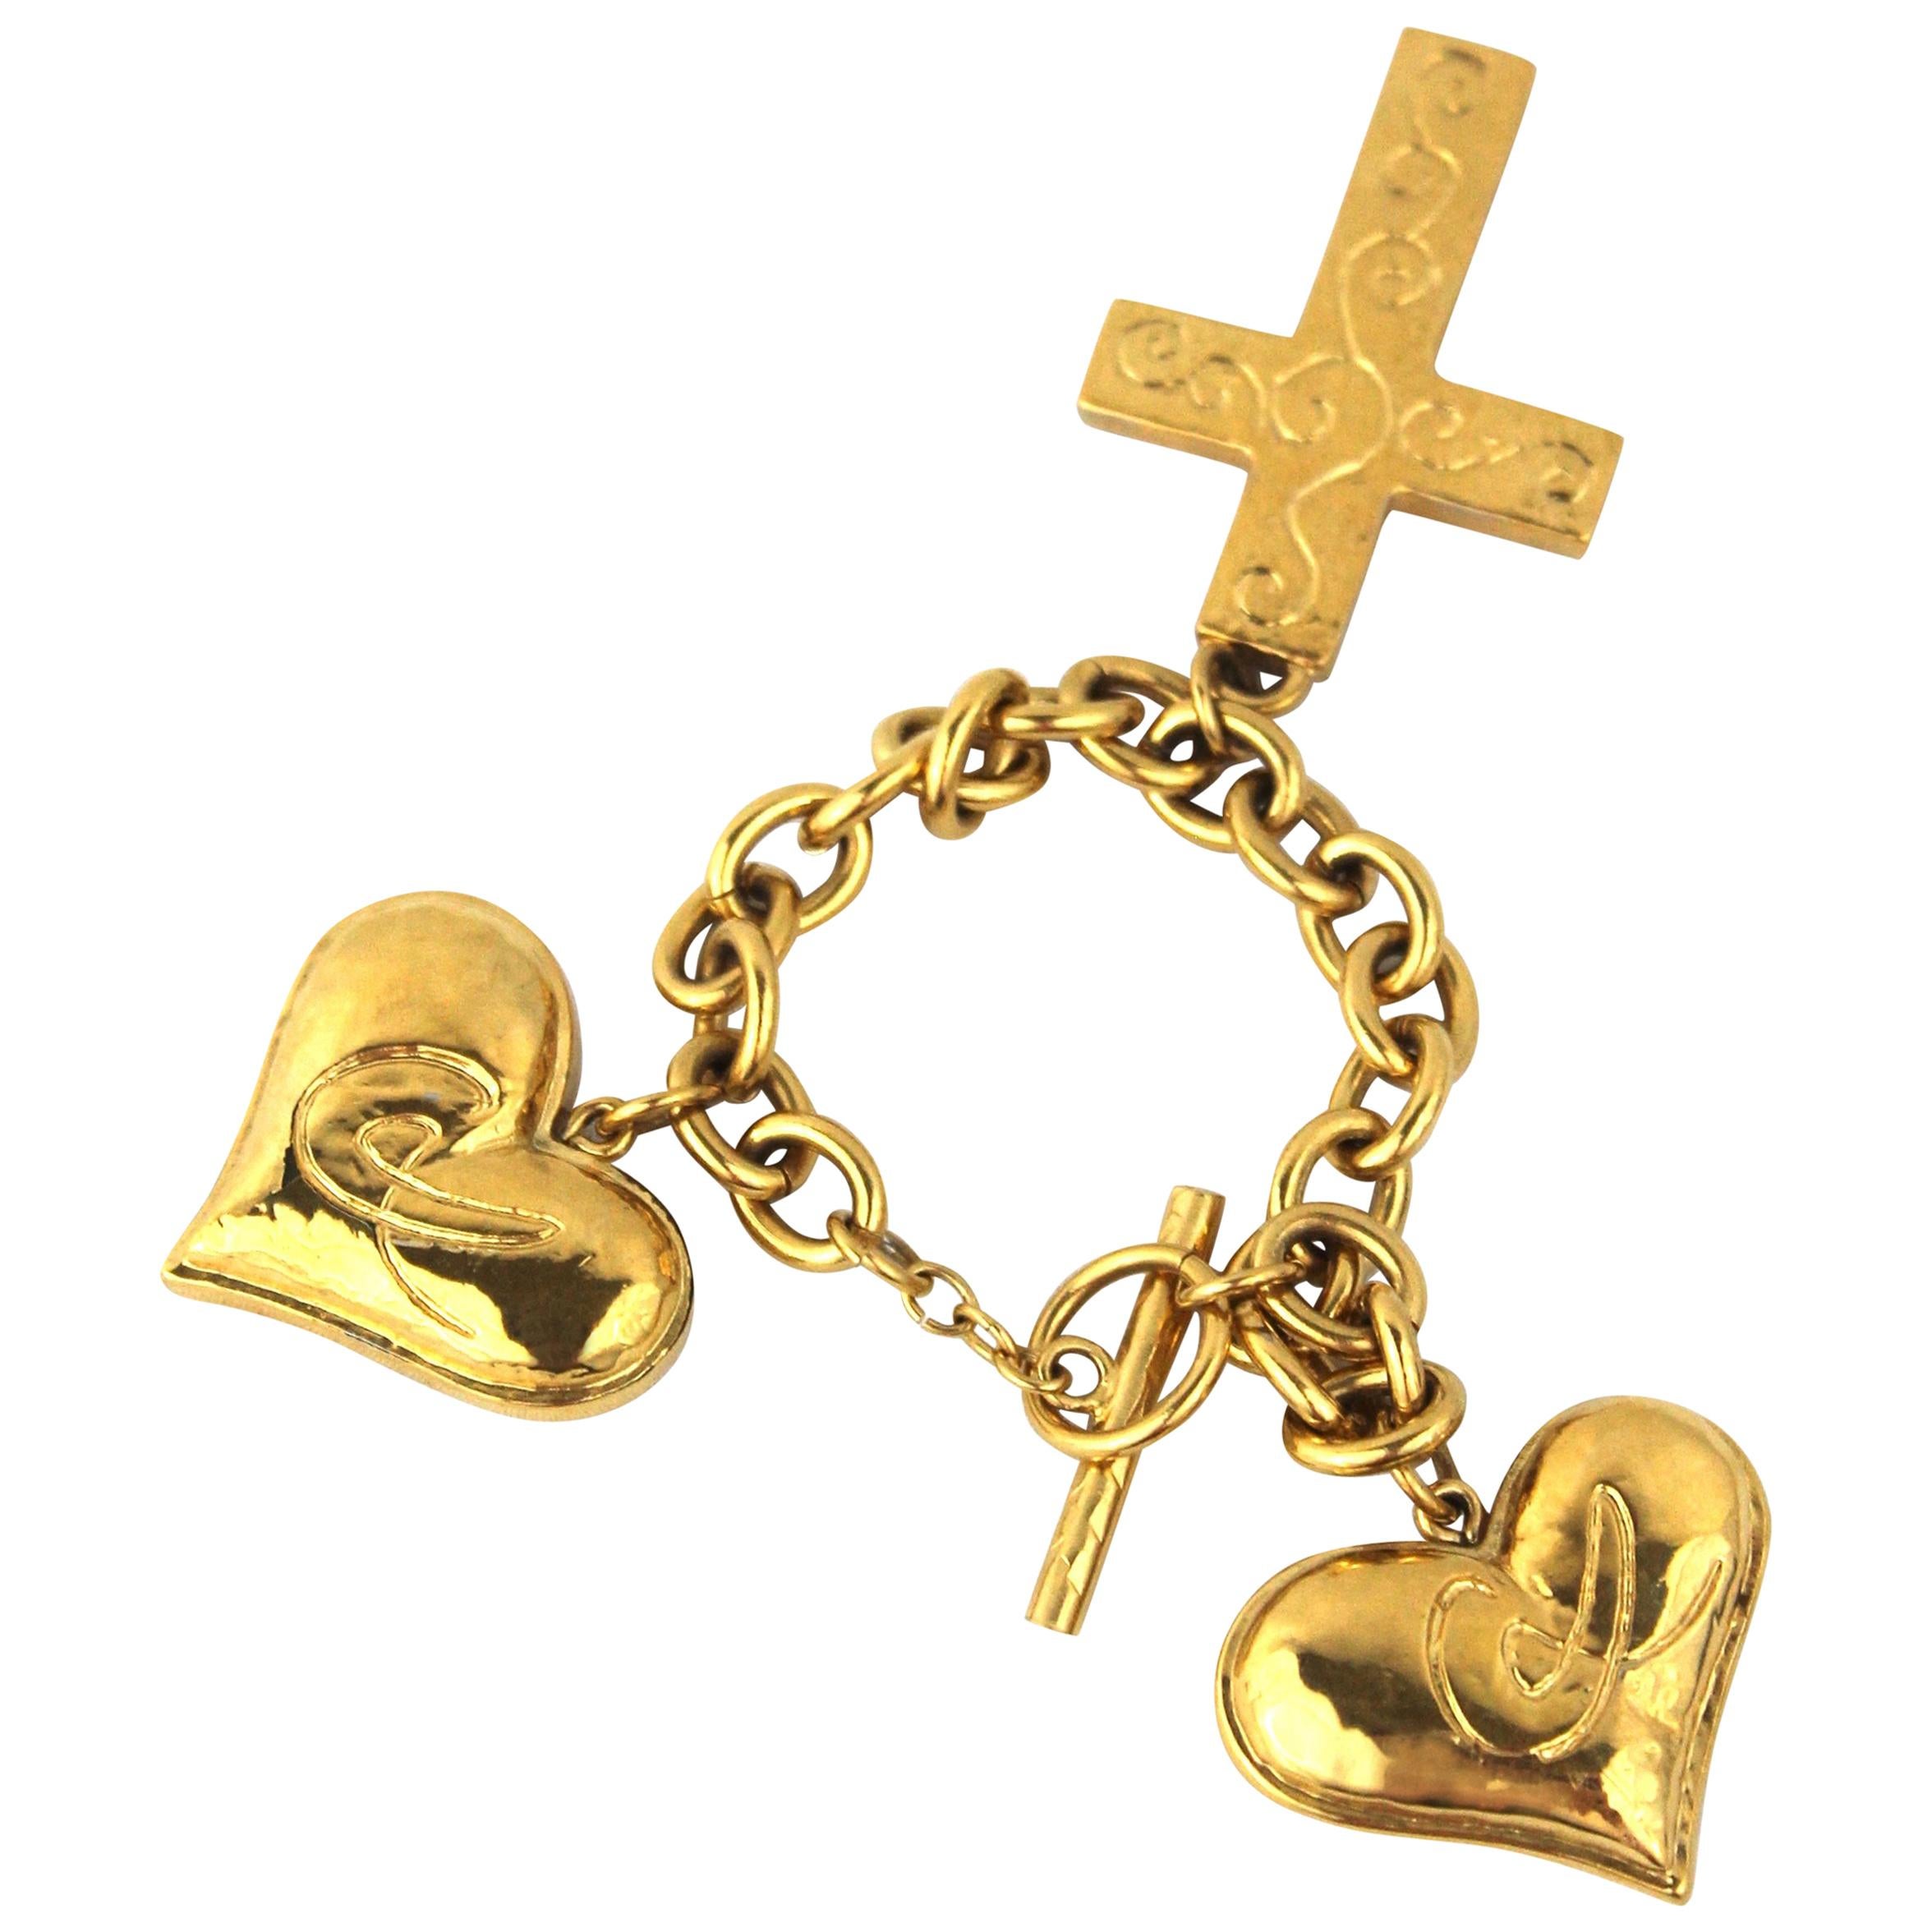 Christian Lacroix Heart Charm Bracelet, 24k Gold Plated, c. 1990's